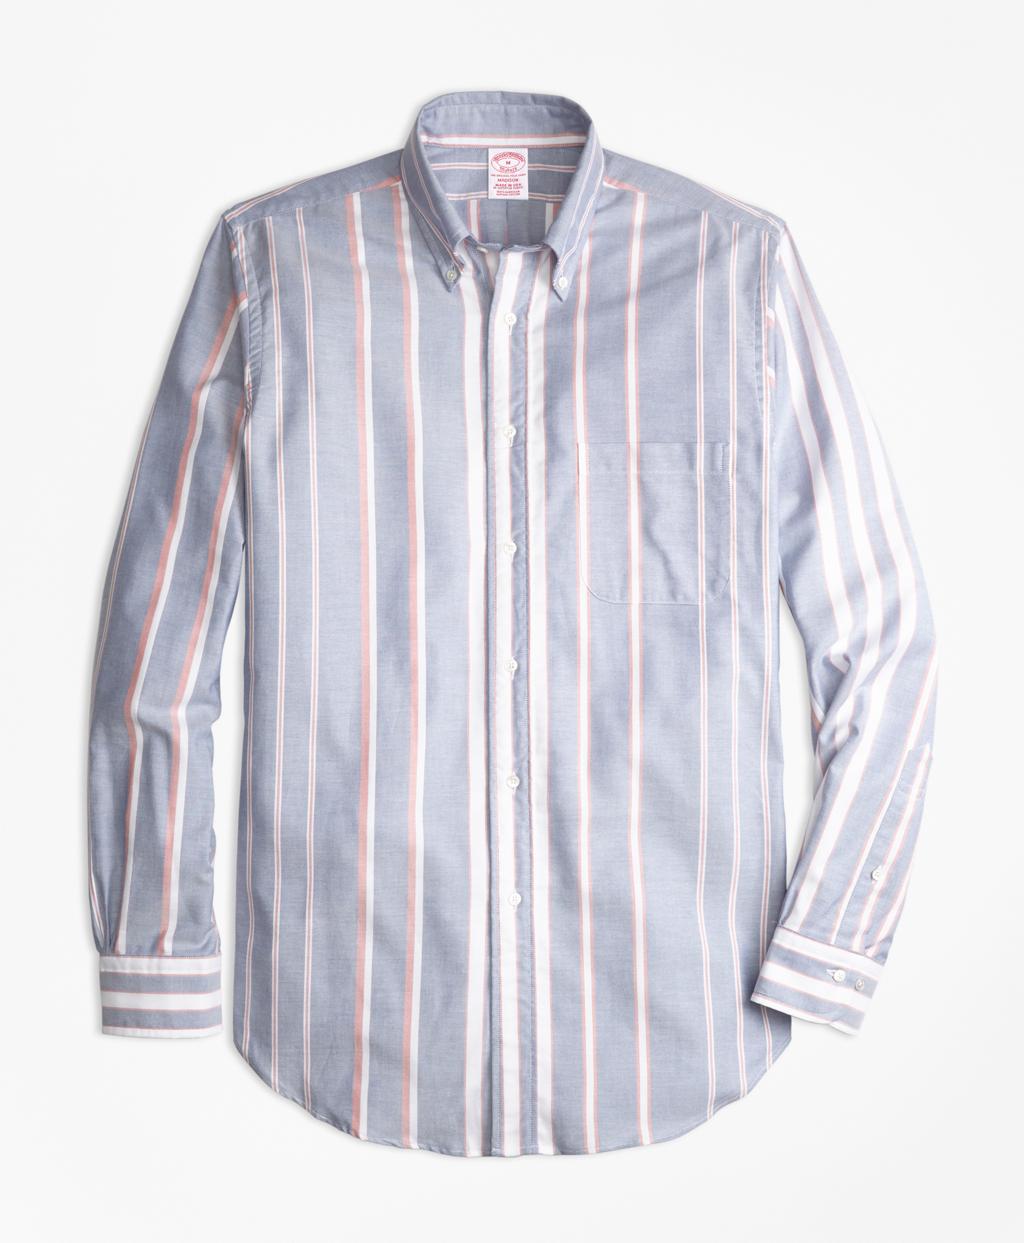 Lyst - Brooks Brothers Regent Fit Oxford Bold Stripe Sport Shirt in ...